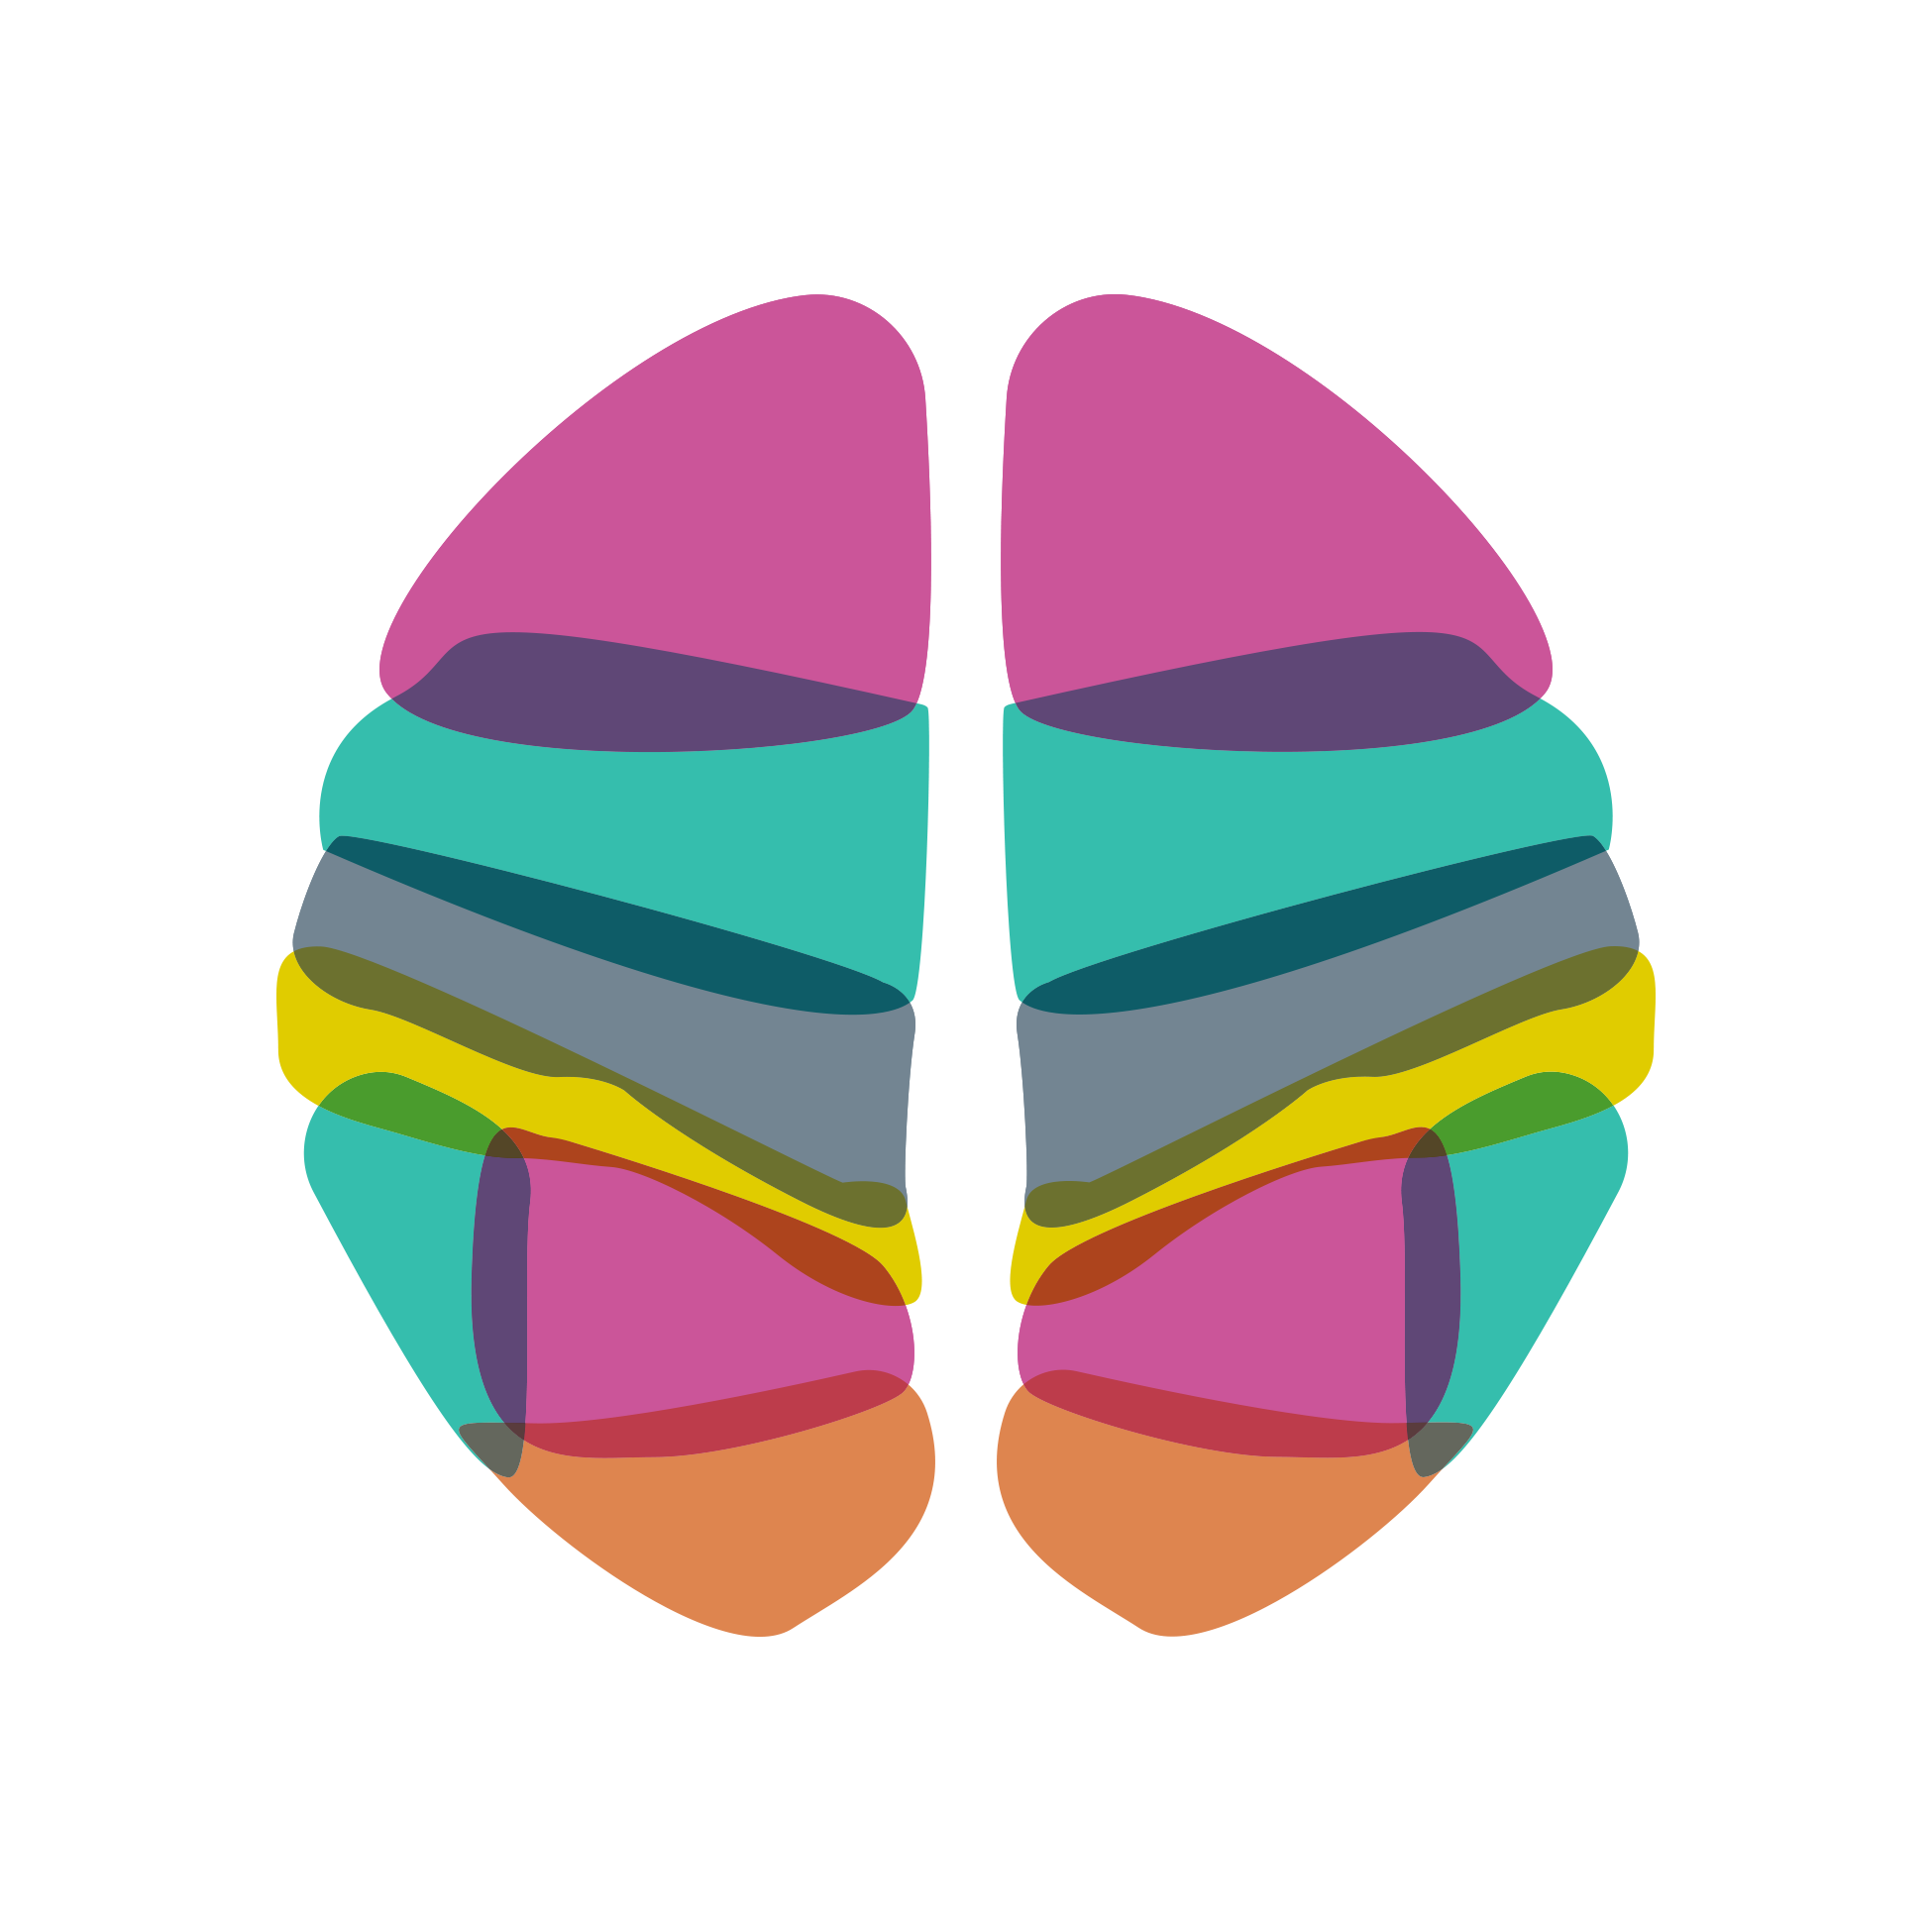 MindMate is an app designed to support seniors brain stimulation